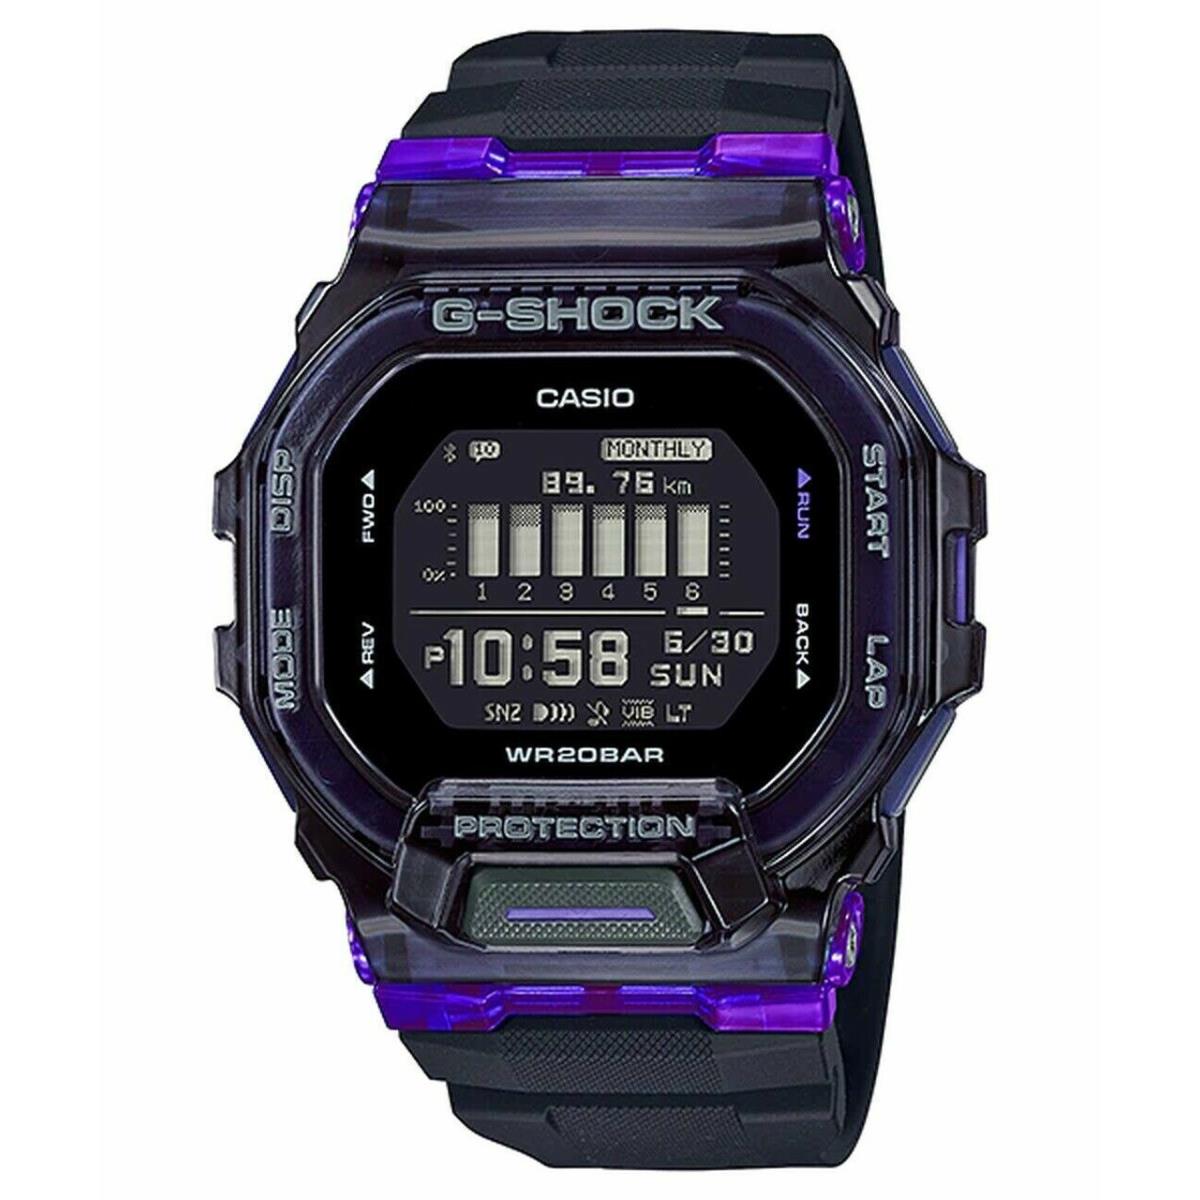 Casio G-shock G-squad Vital Bright Vibrant Purple Digital Watch GBD200SM-1A6